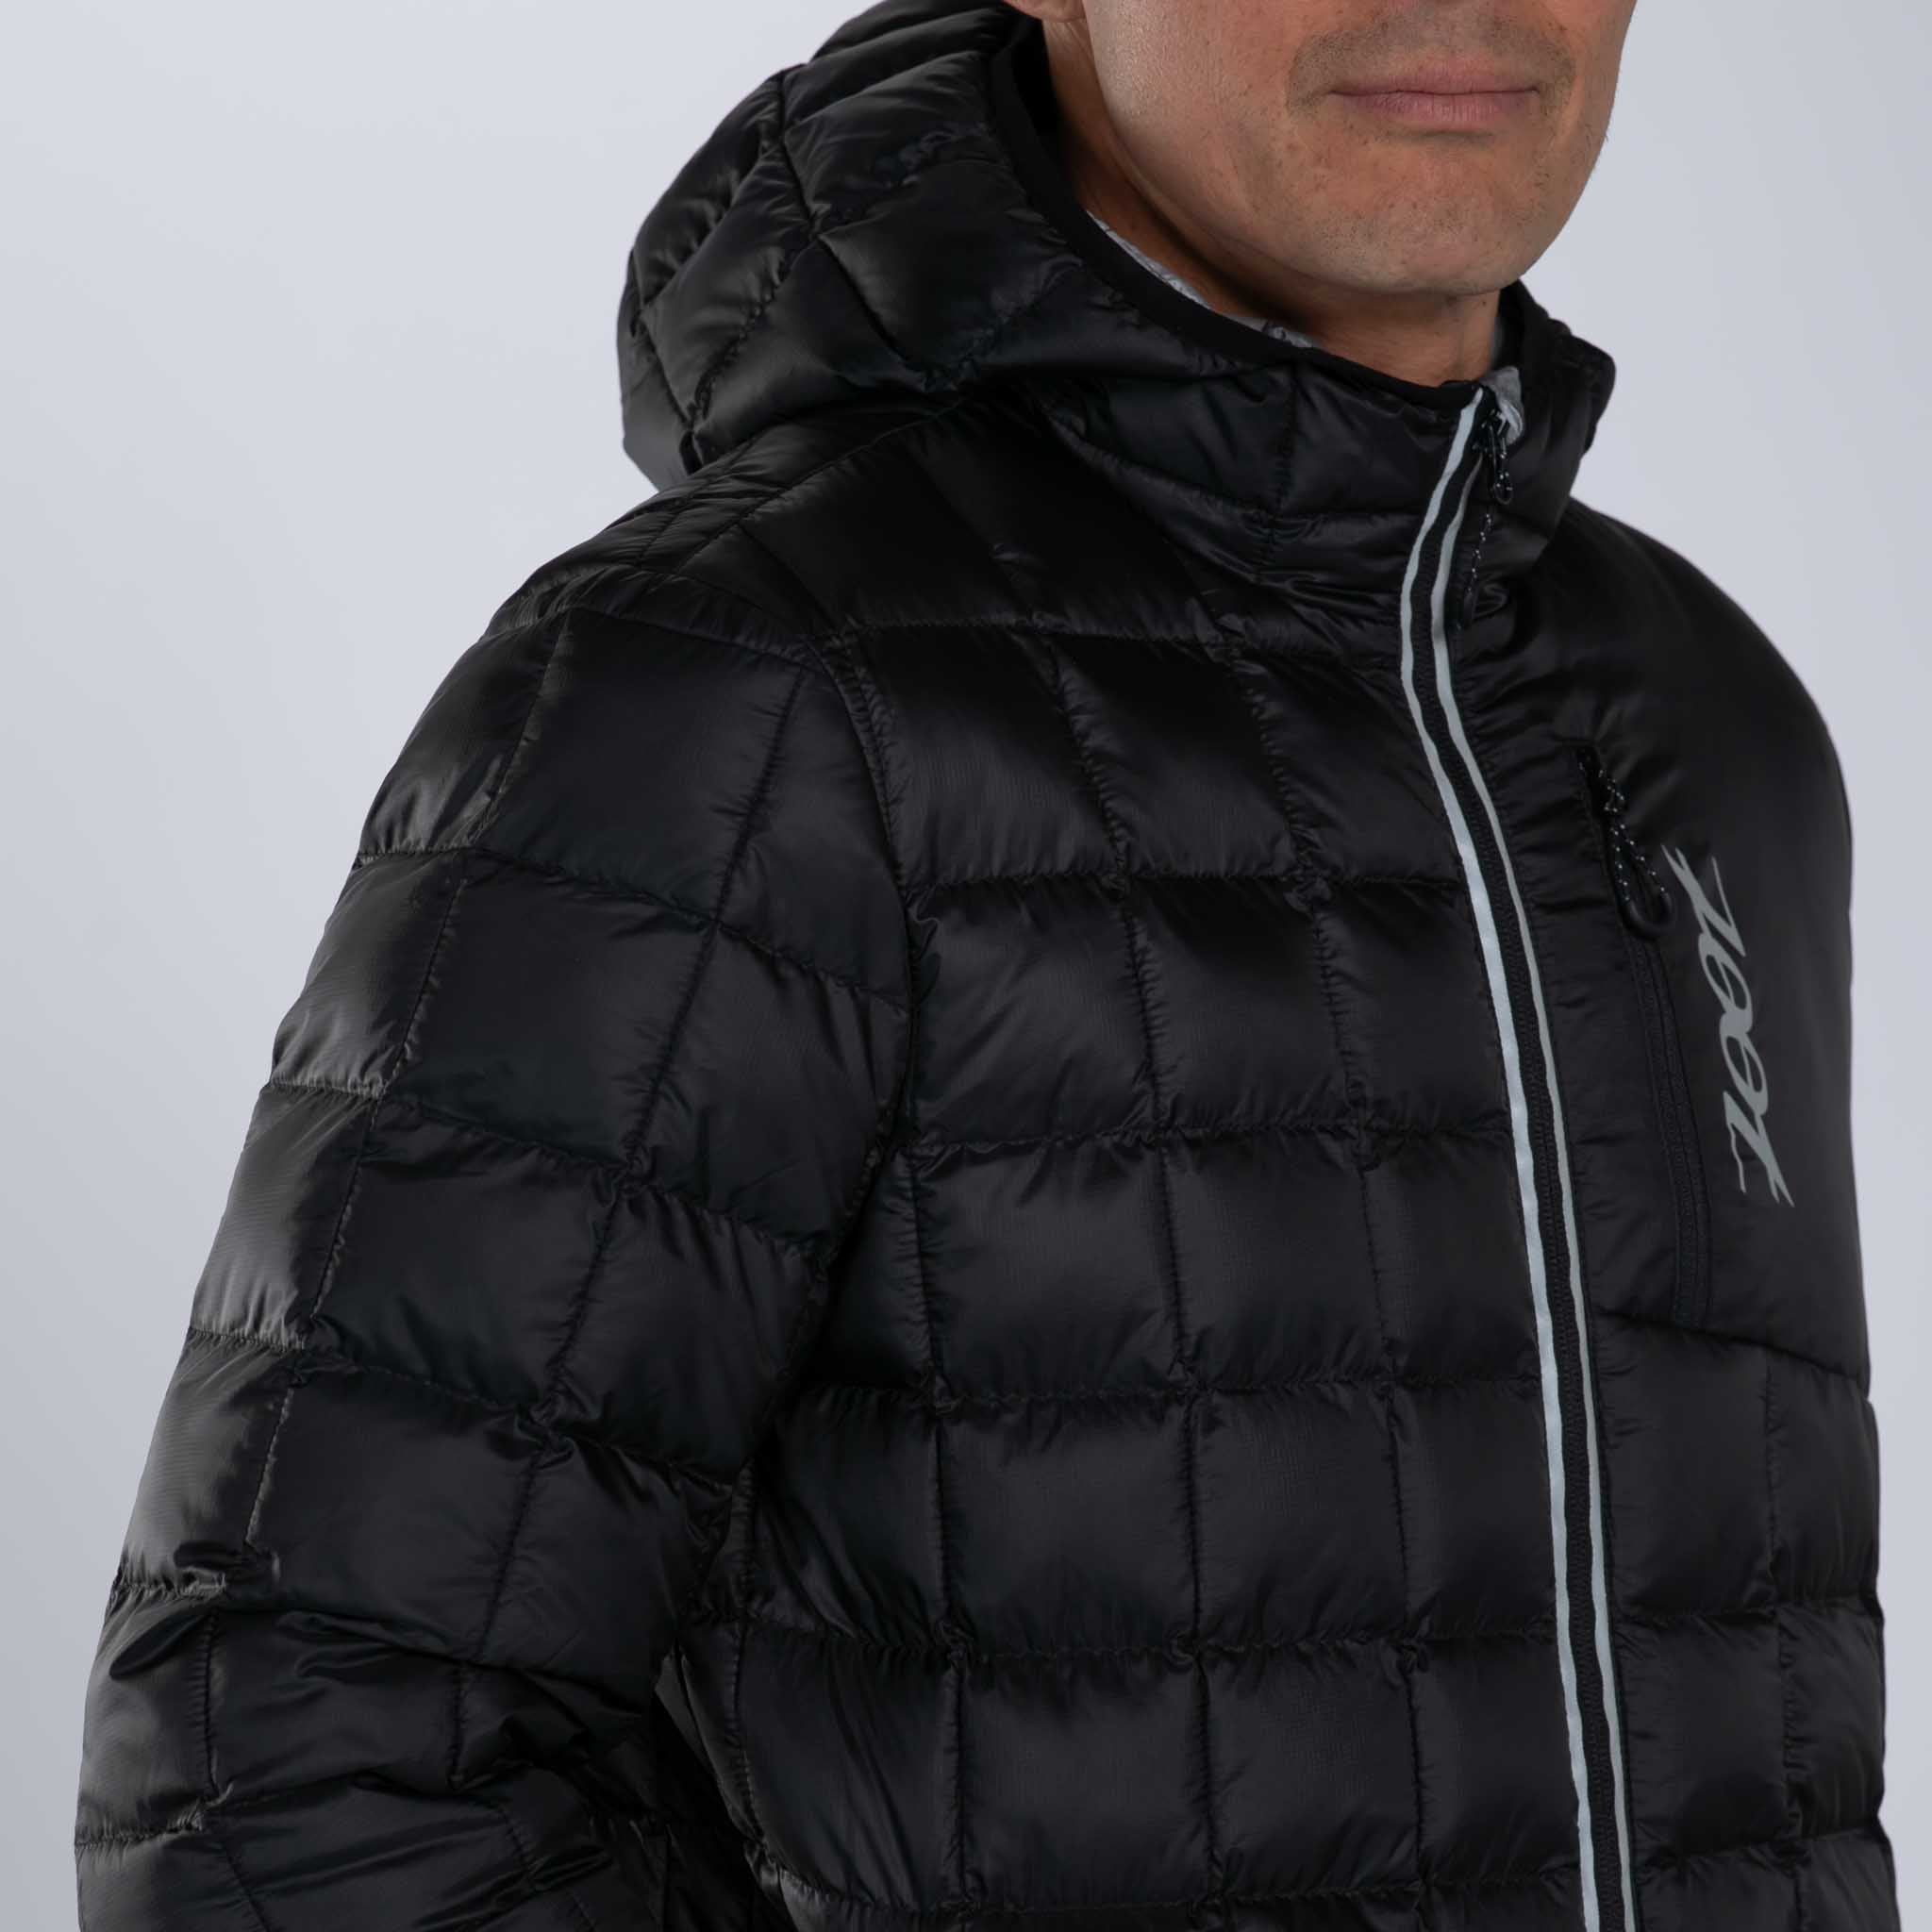 Zoot Sports RUN OUTERWEAR Men's Elite Puffer Jacket - Black